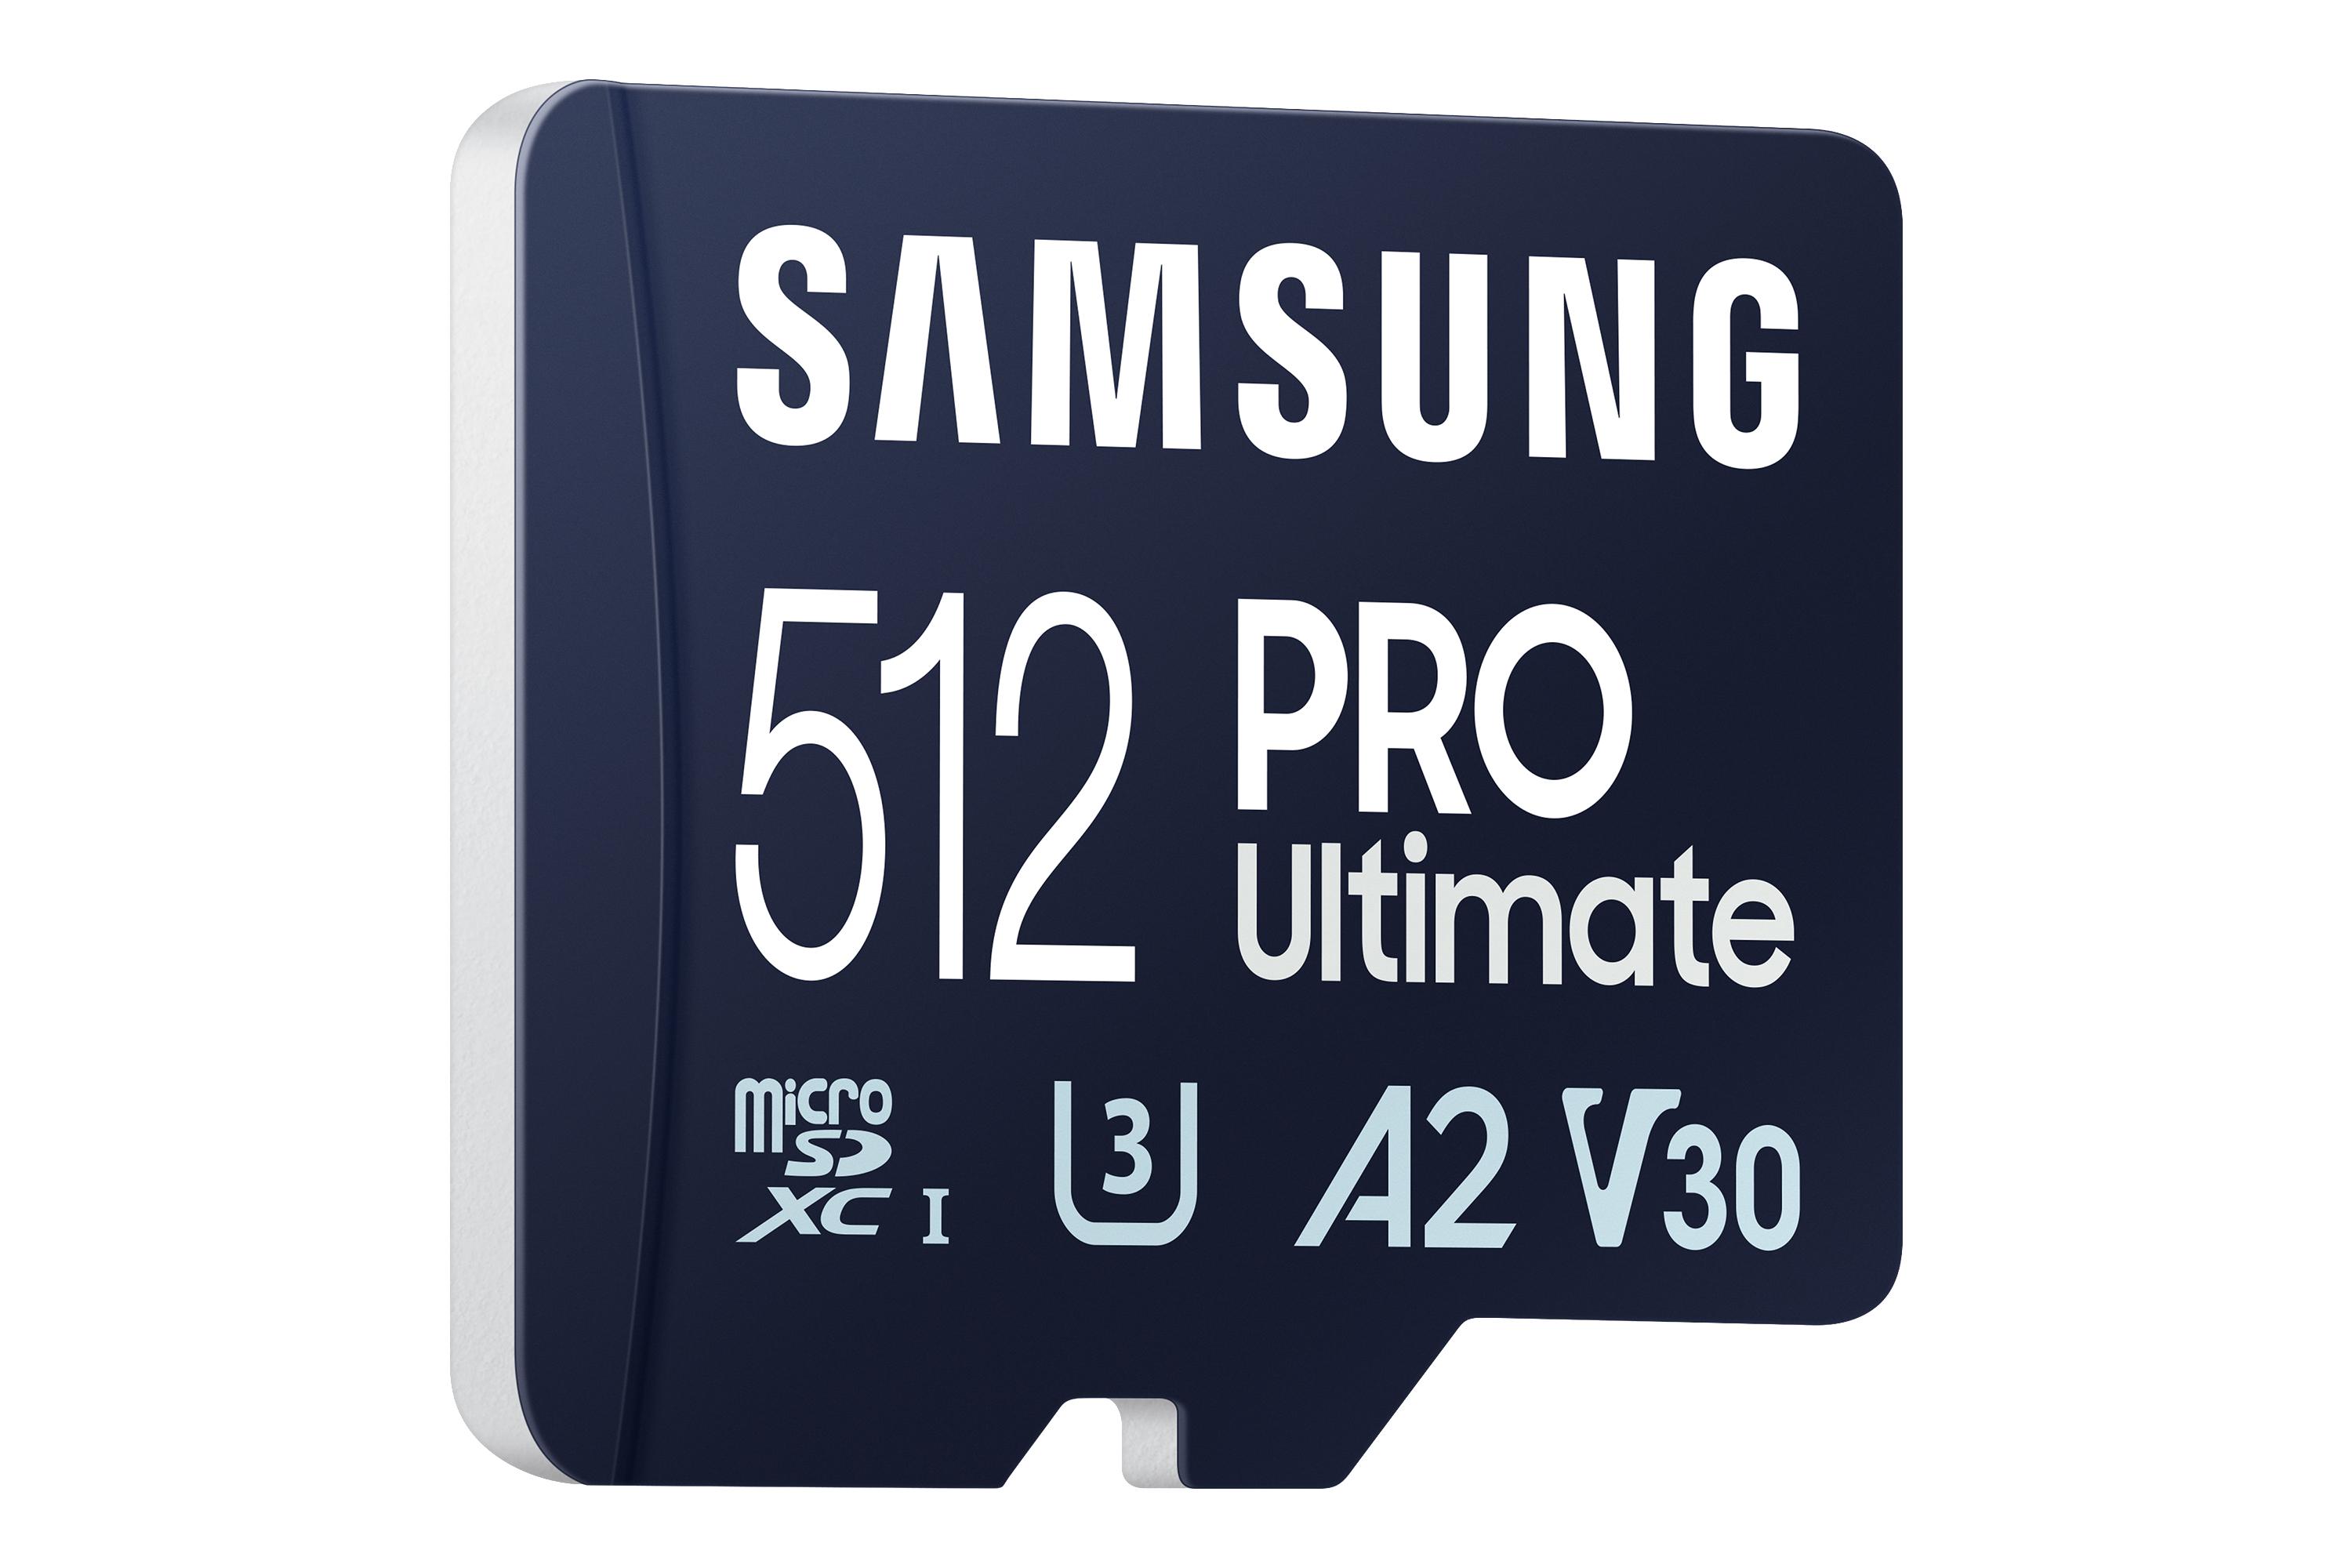 GB, 512 PRO 200 Micro-SD Ultimate, MB/s Speicherkarte, SAMSUNG